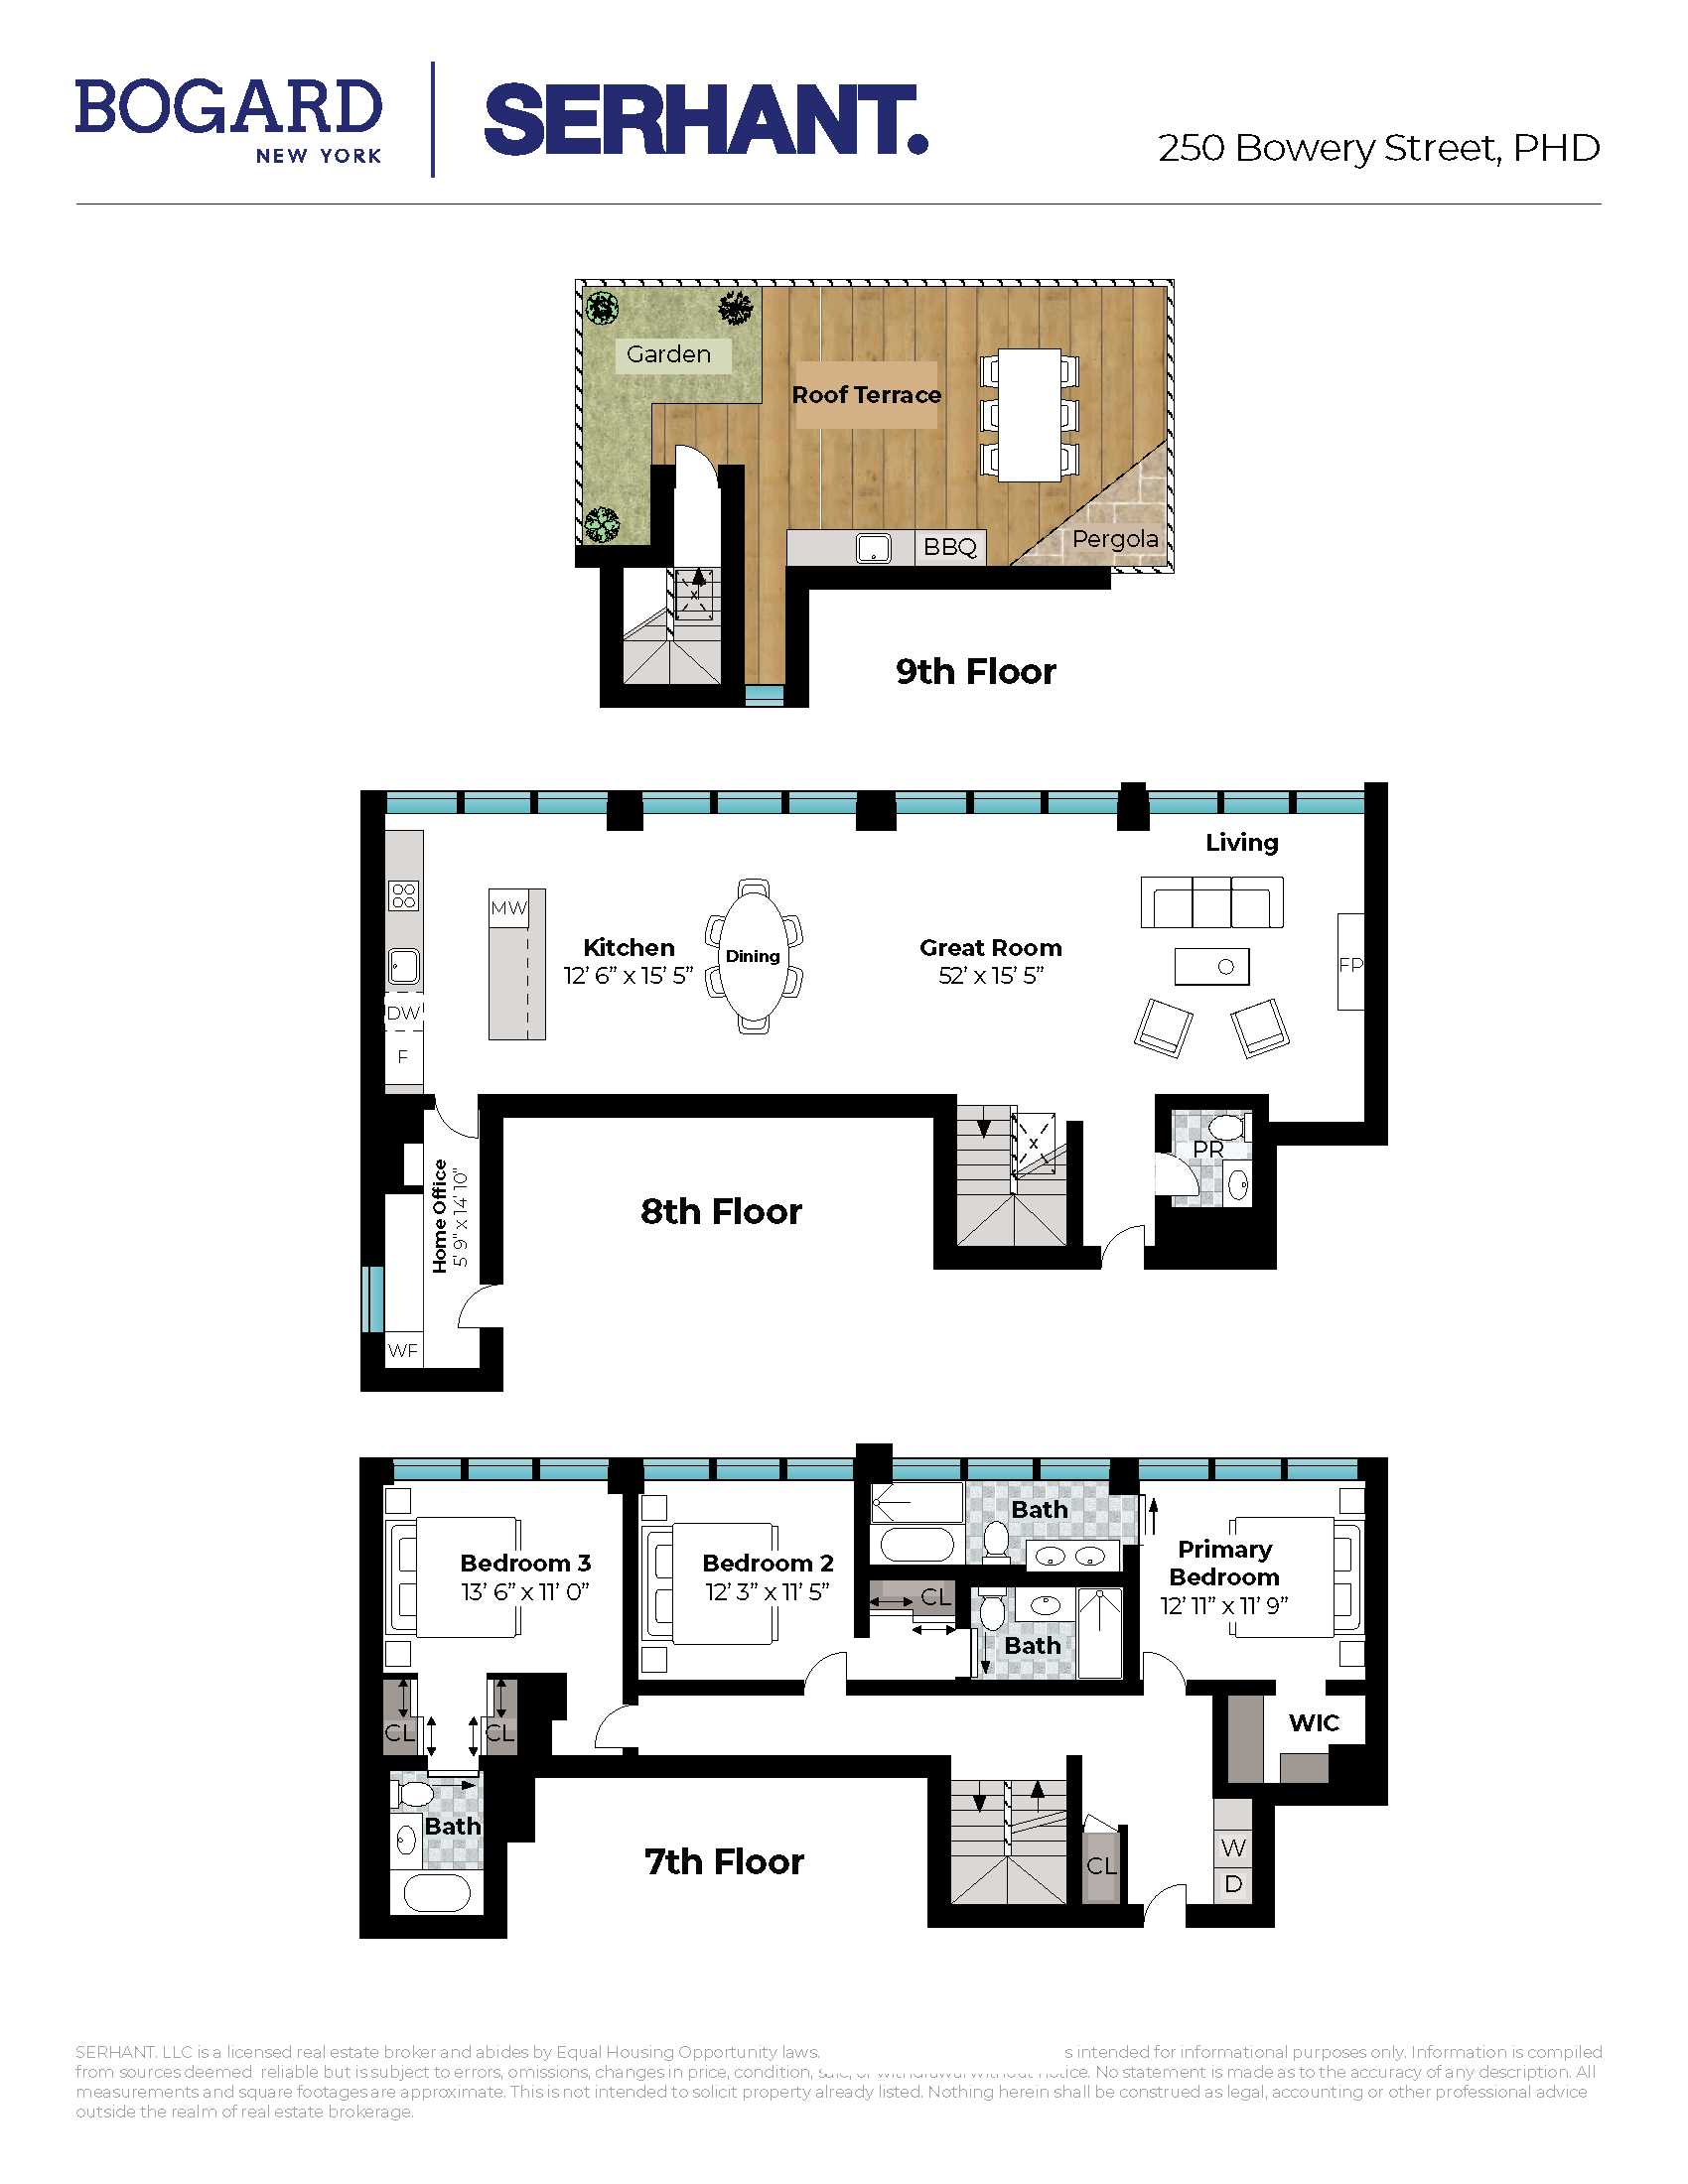 Floorplan for 250 Bowery, PHD